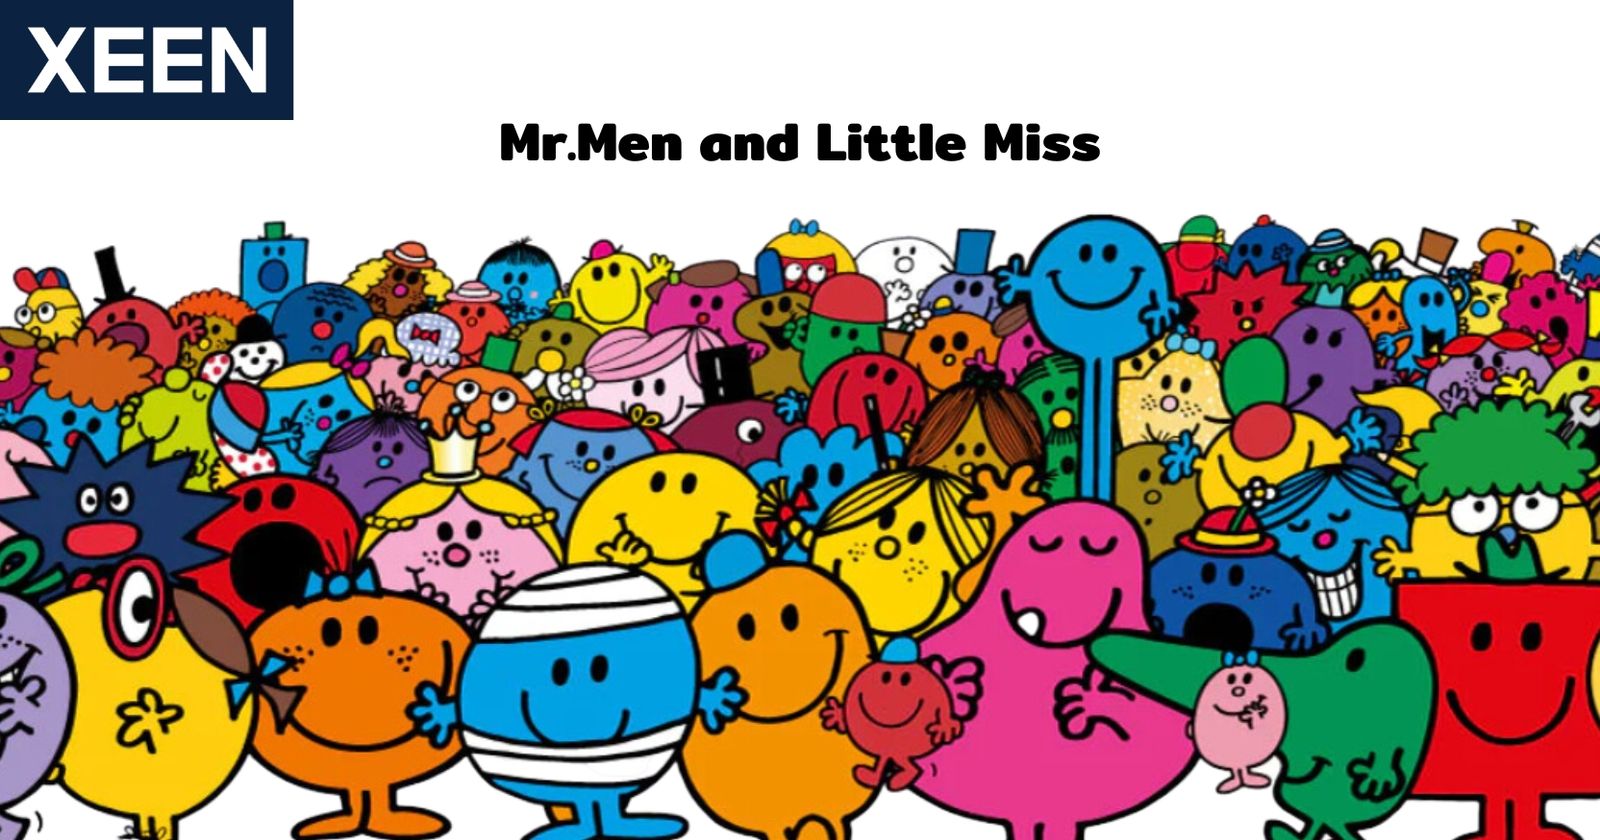 Mr.Men and Little Miss มีทั้งหมดกี่สี พร้อมบอกนิสัย ความหมายแต่ละตัว